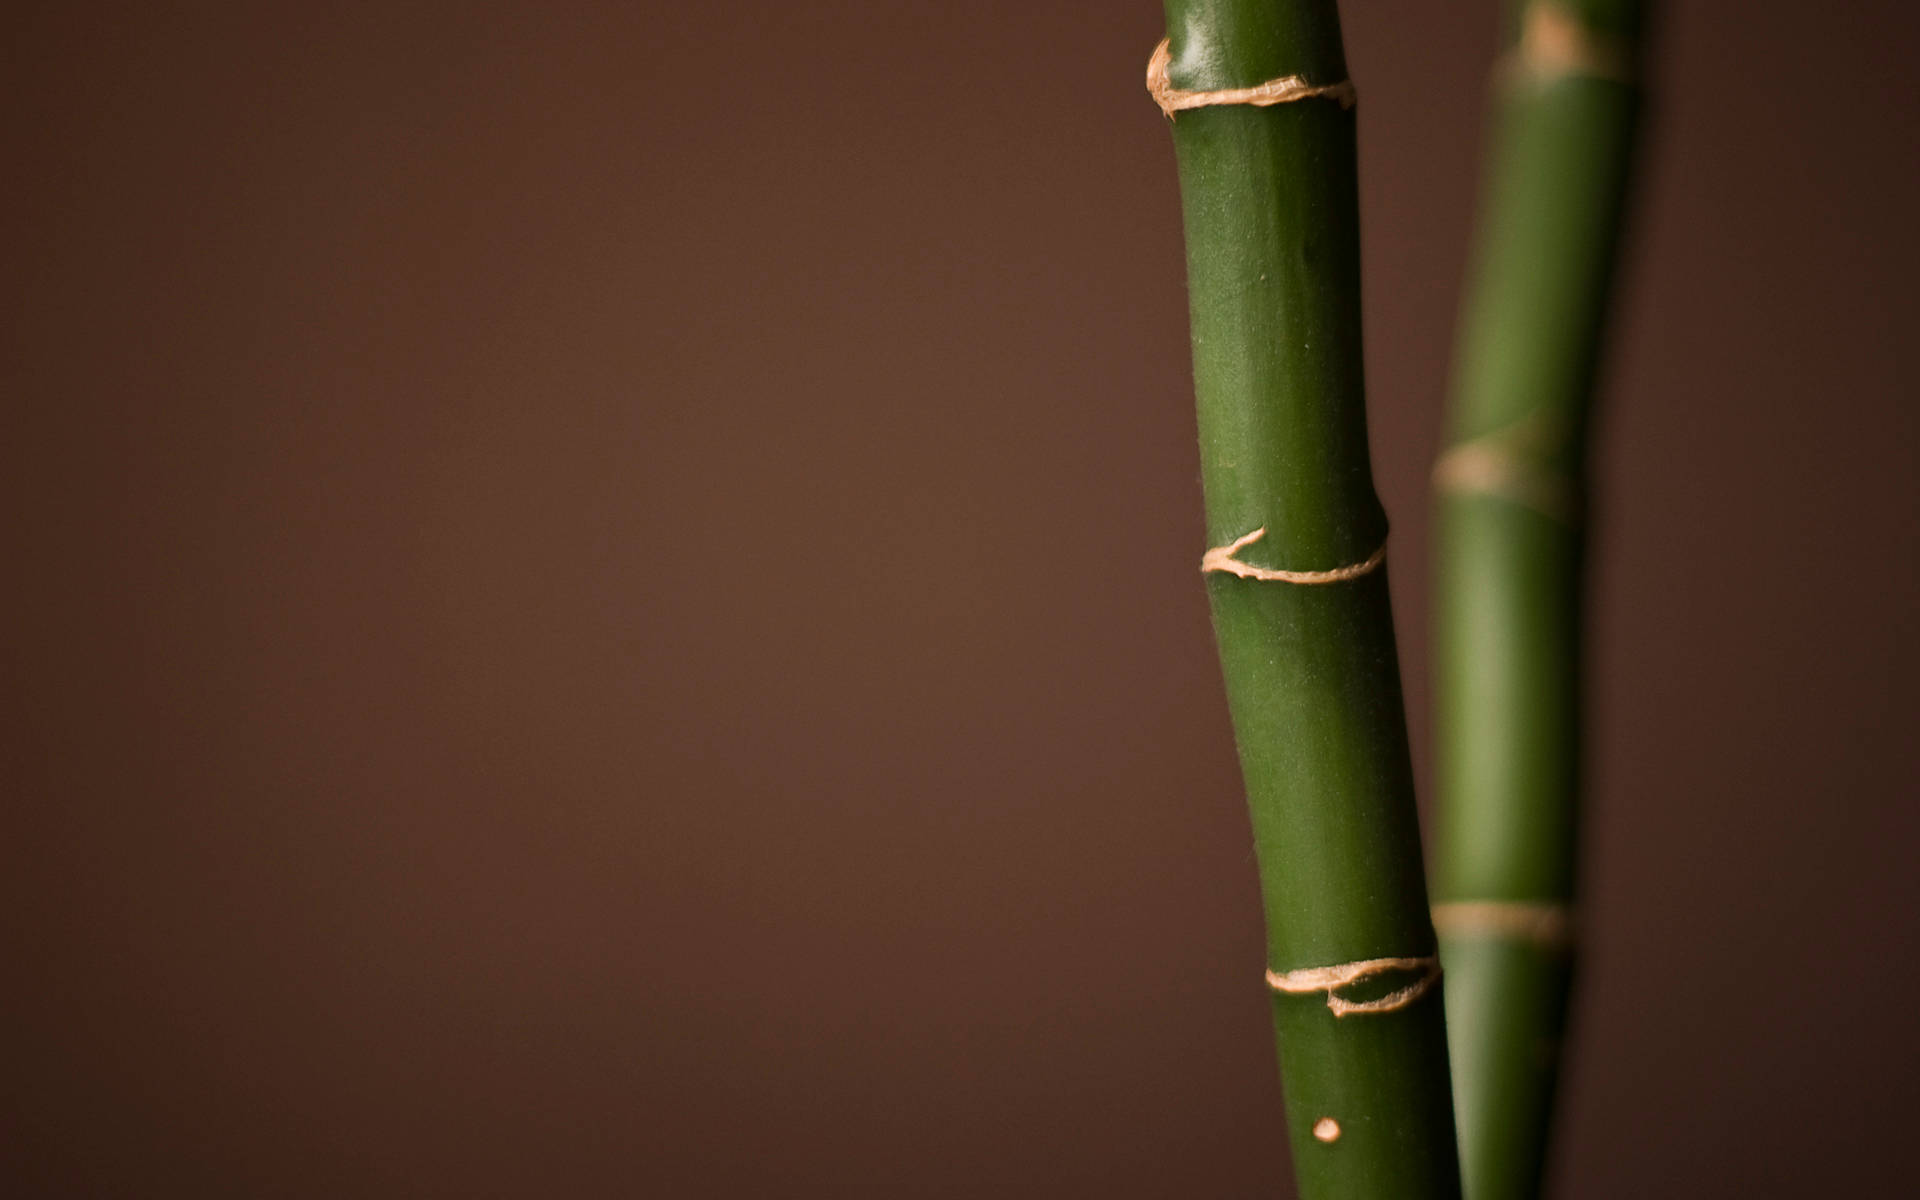 Two Bamboo Sticks